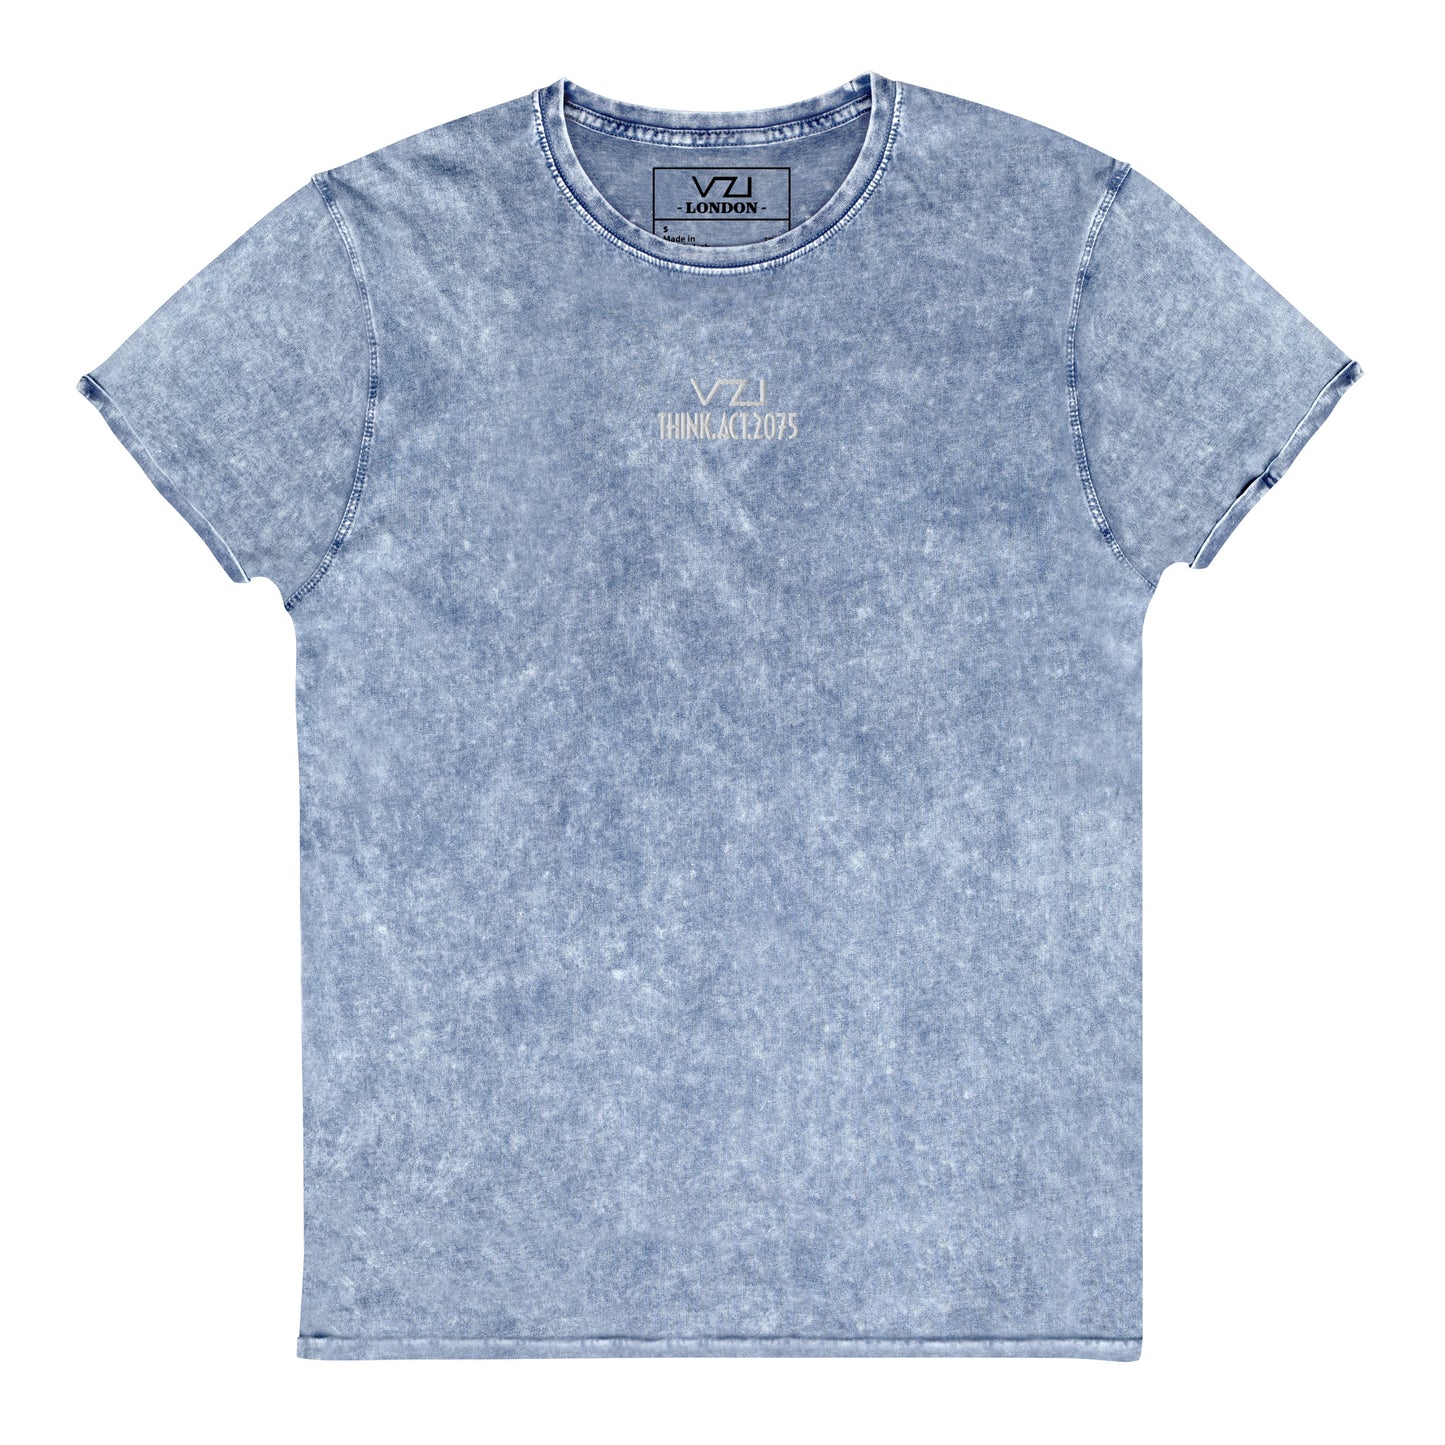 VZI T-Shirt - T-Shirt For Men's: Denim T-Shirt, Streetwear, Smart Casual, Jeans